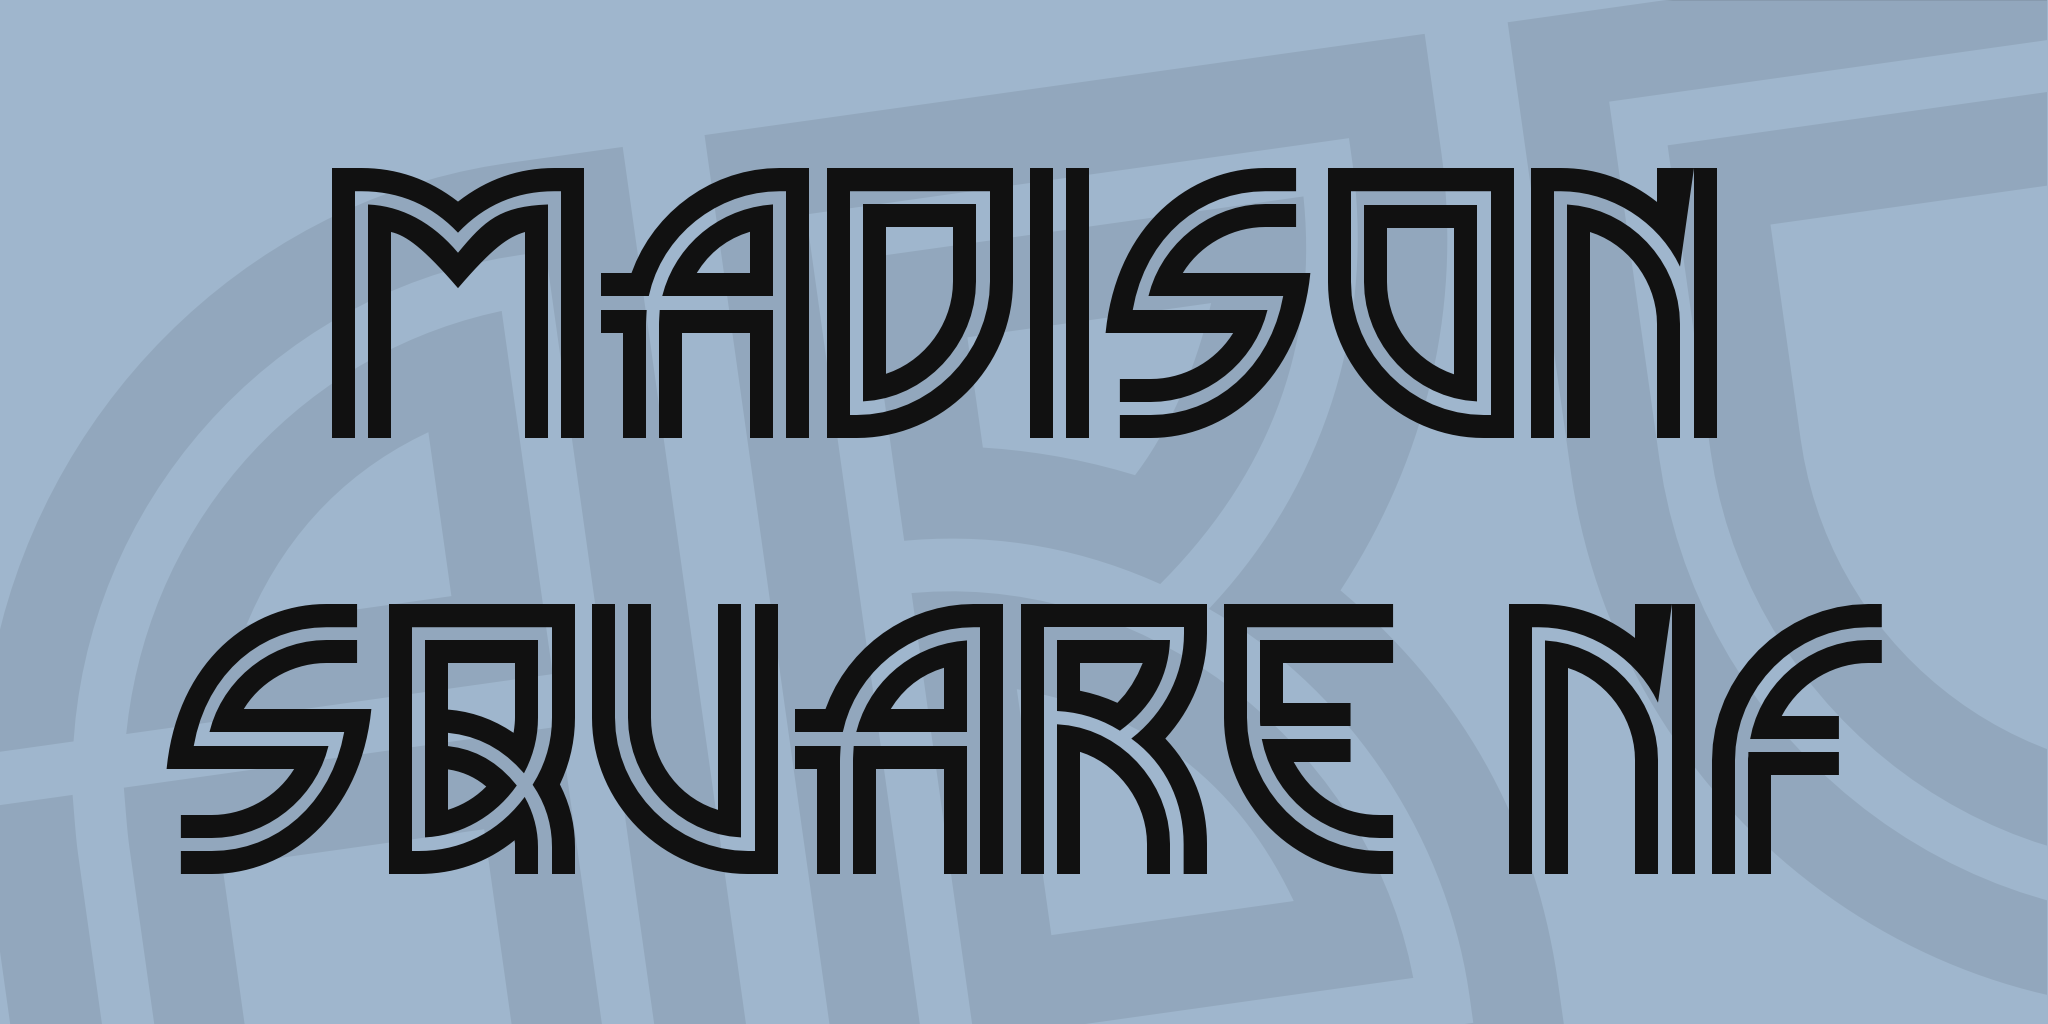 Madison Square Nf